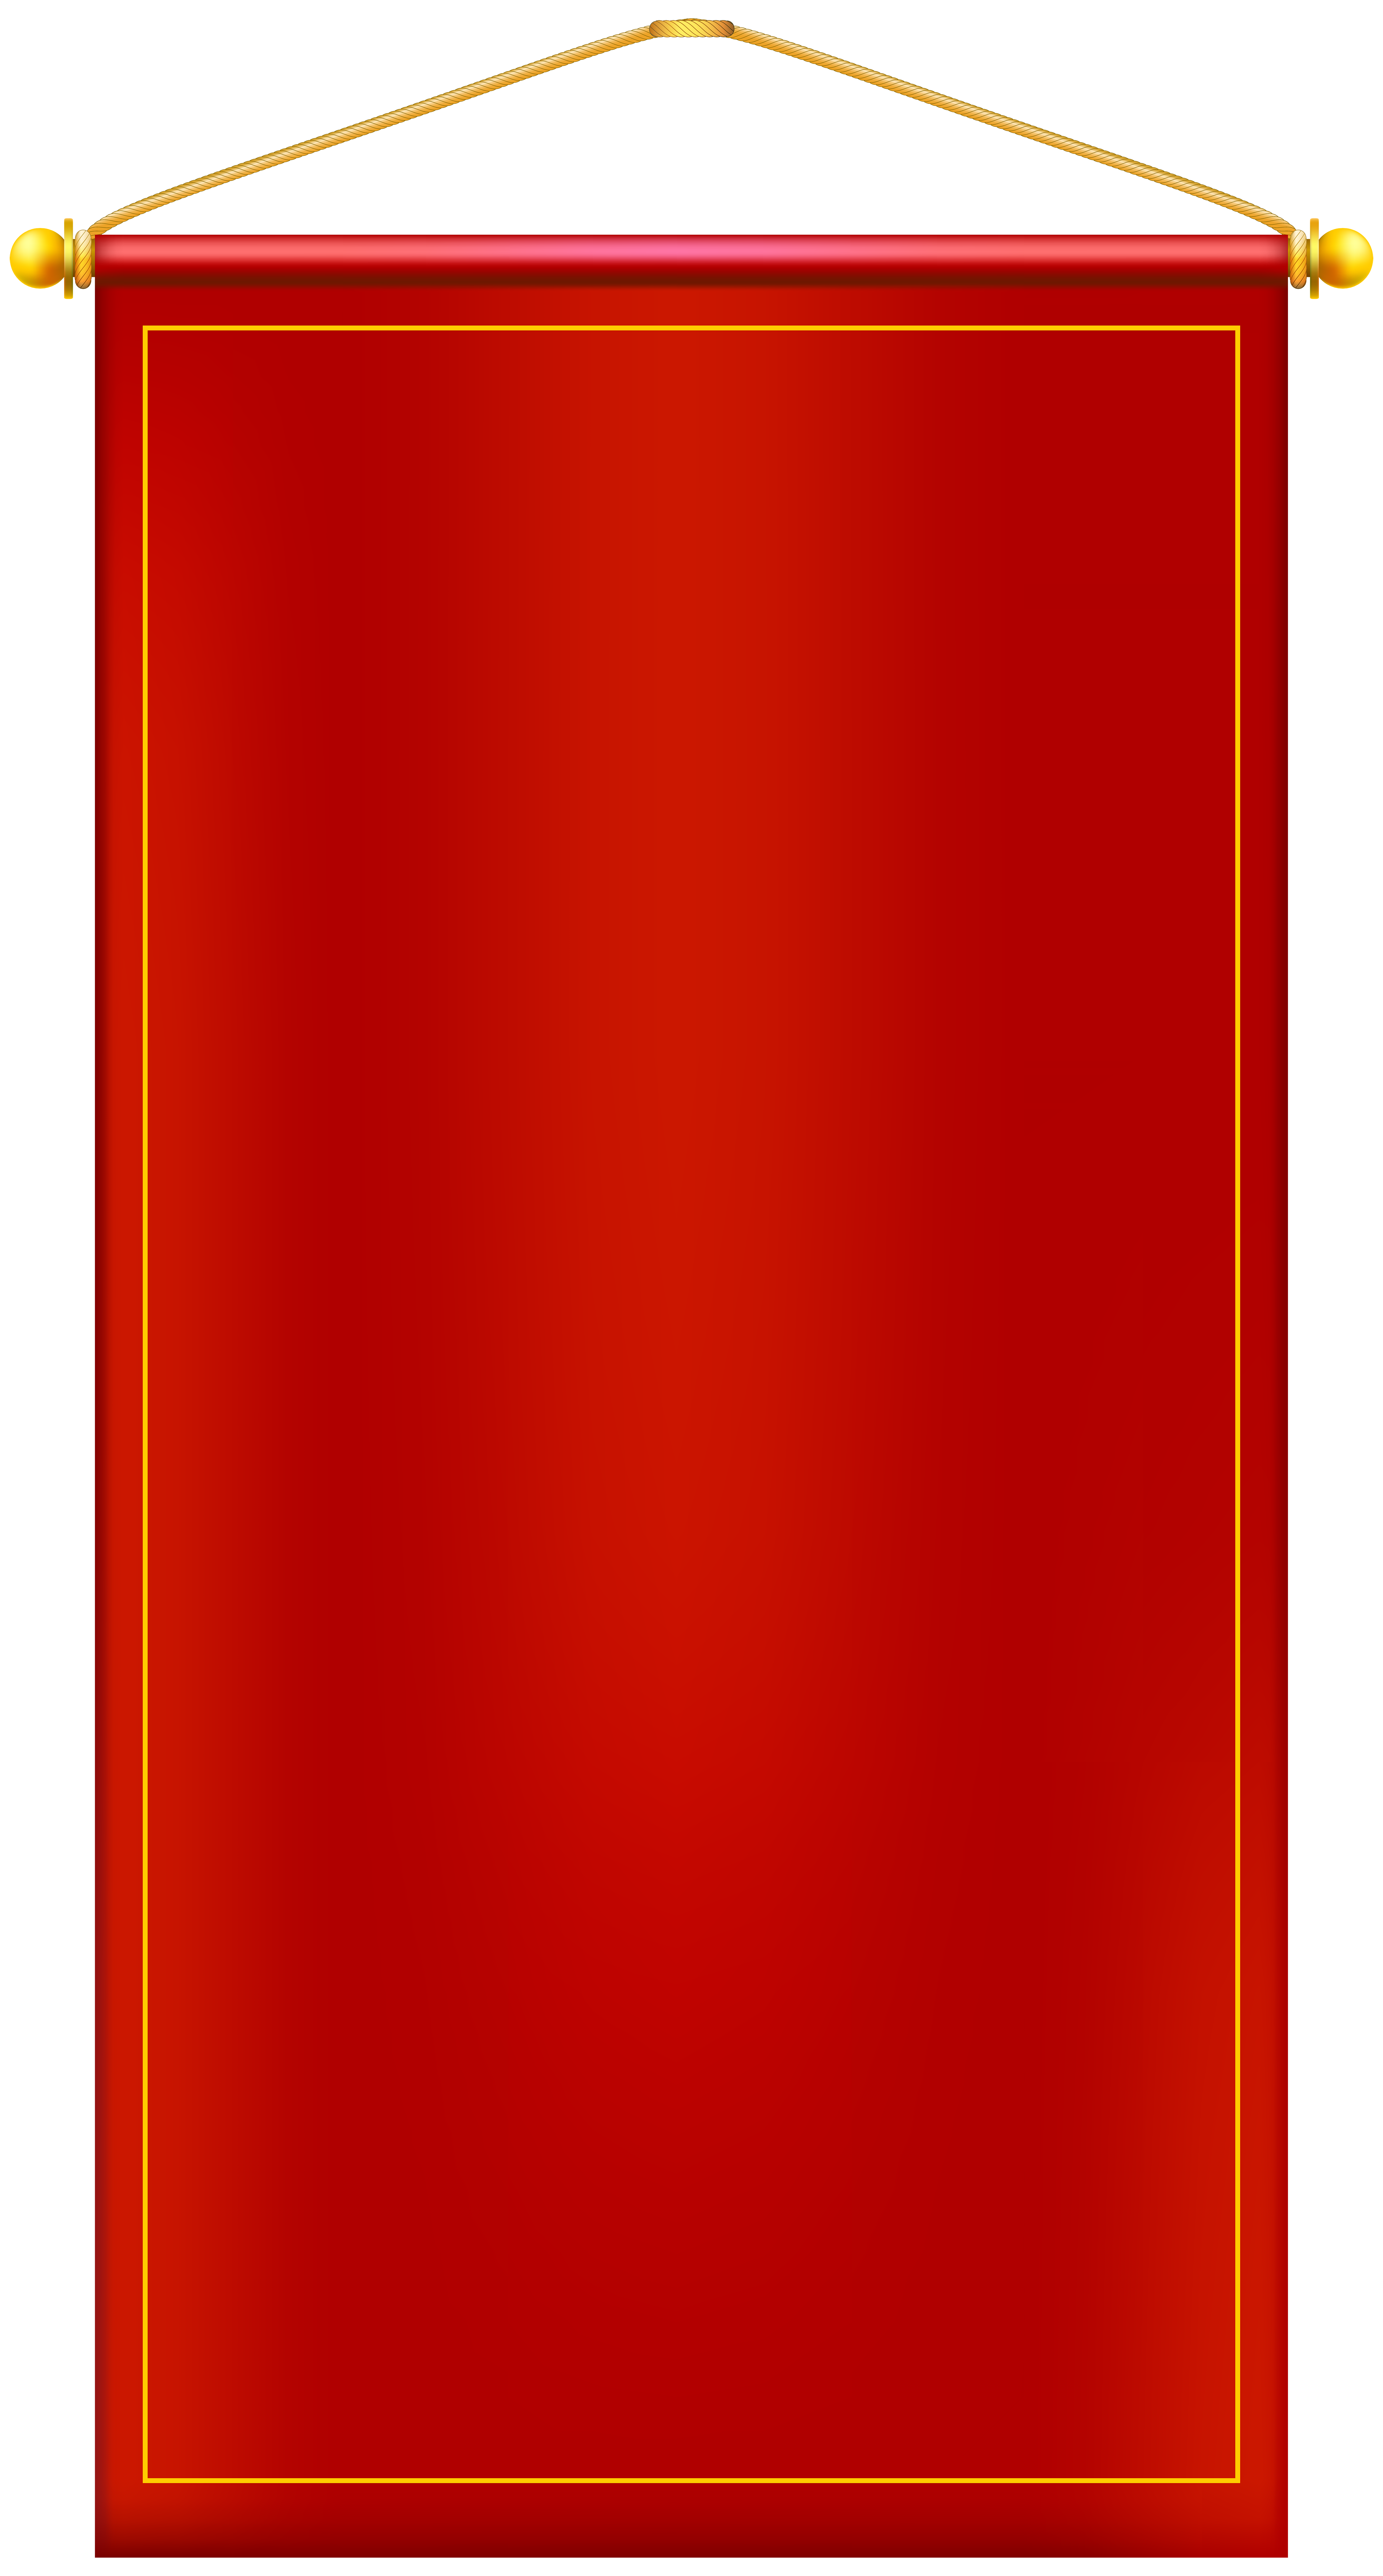 Vertical red banner.